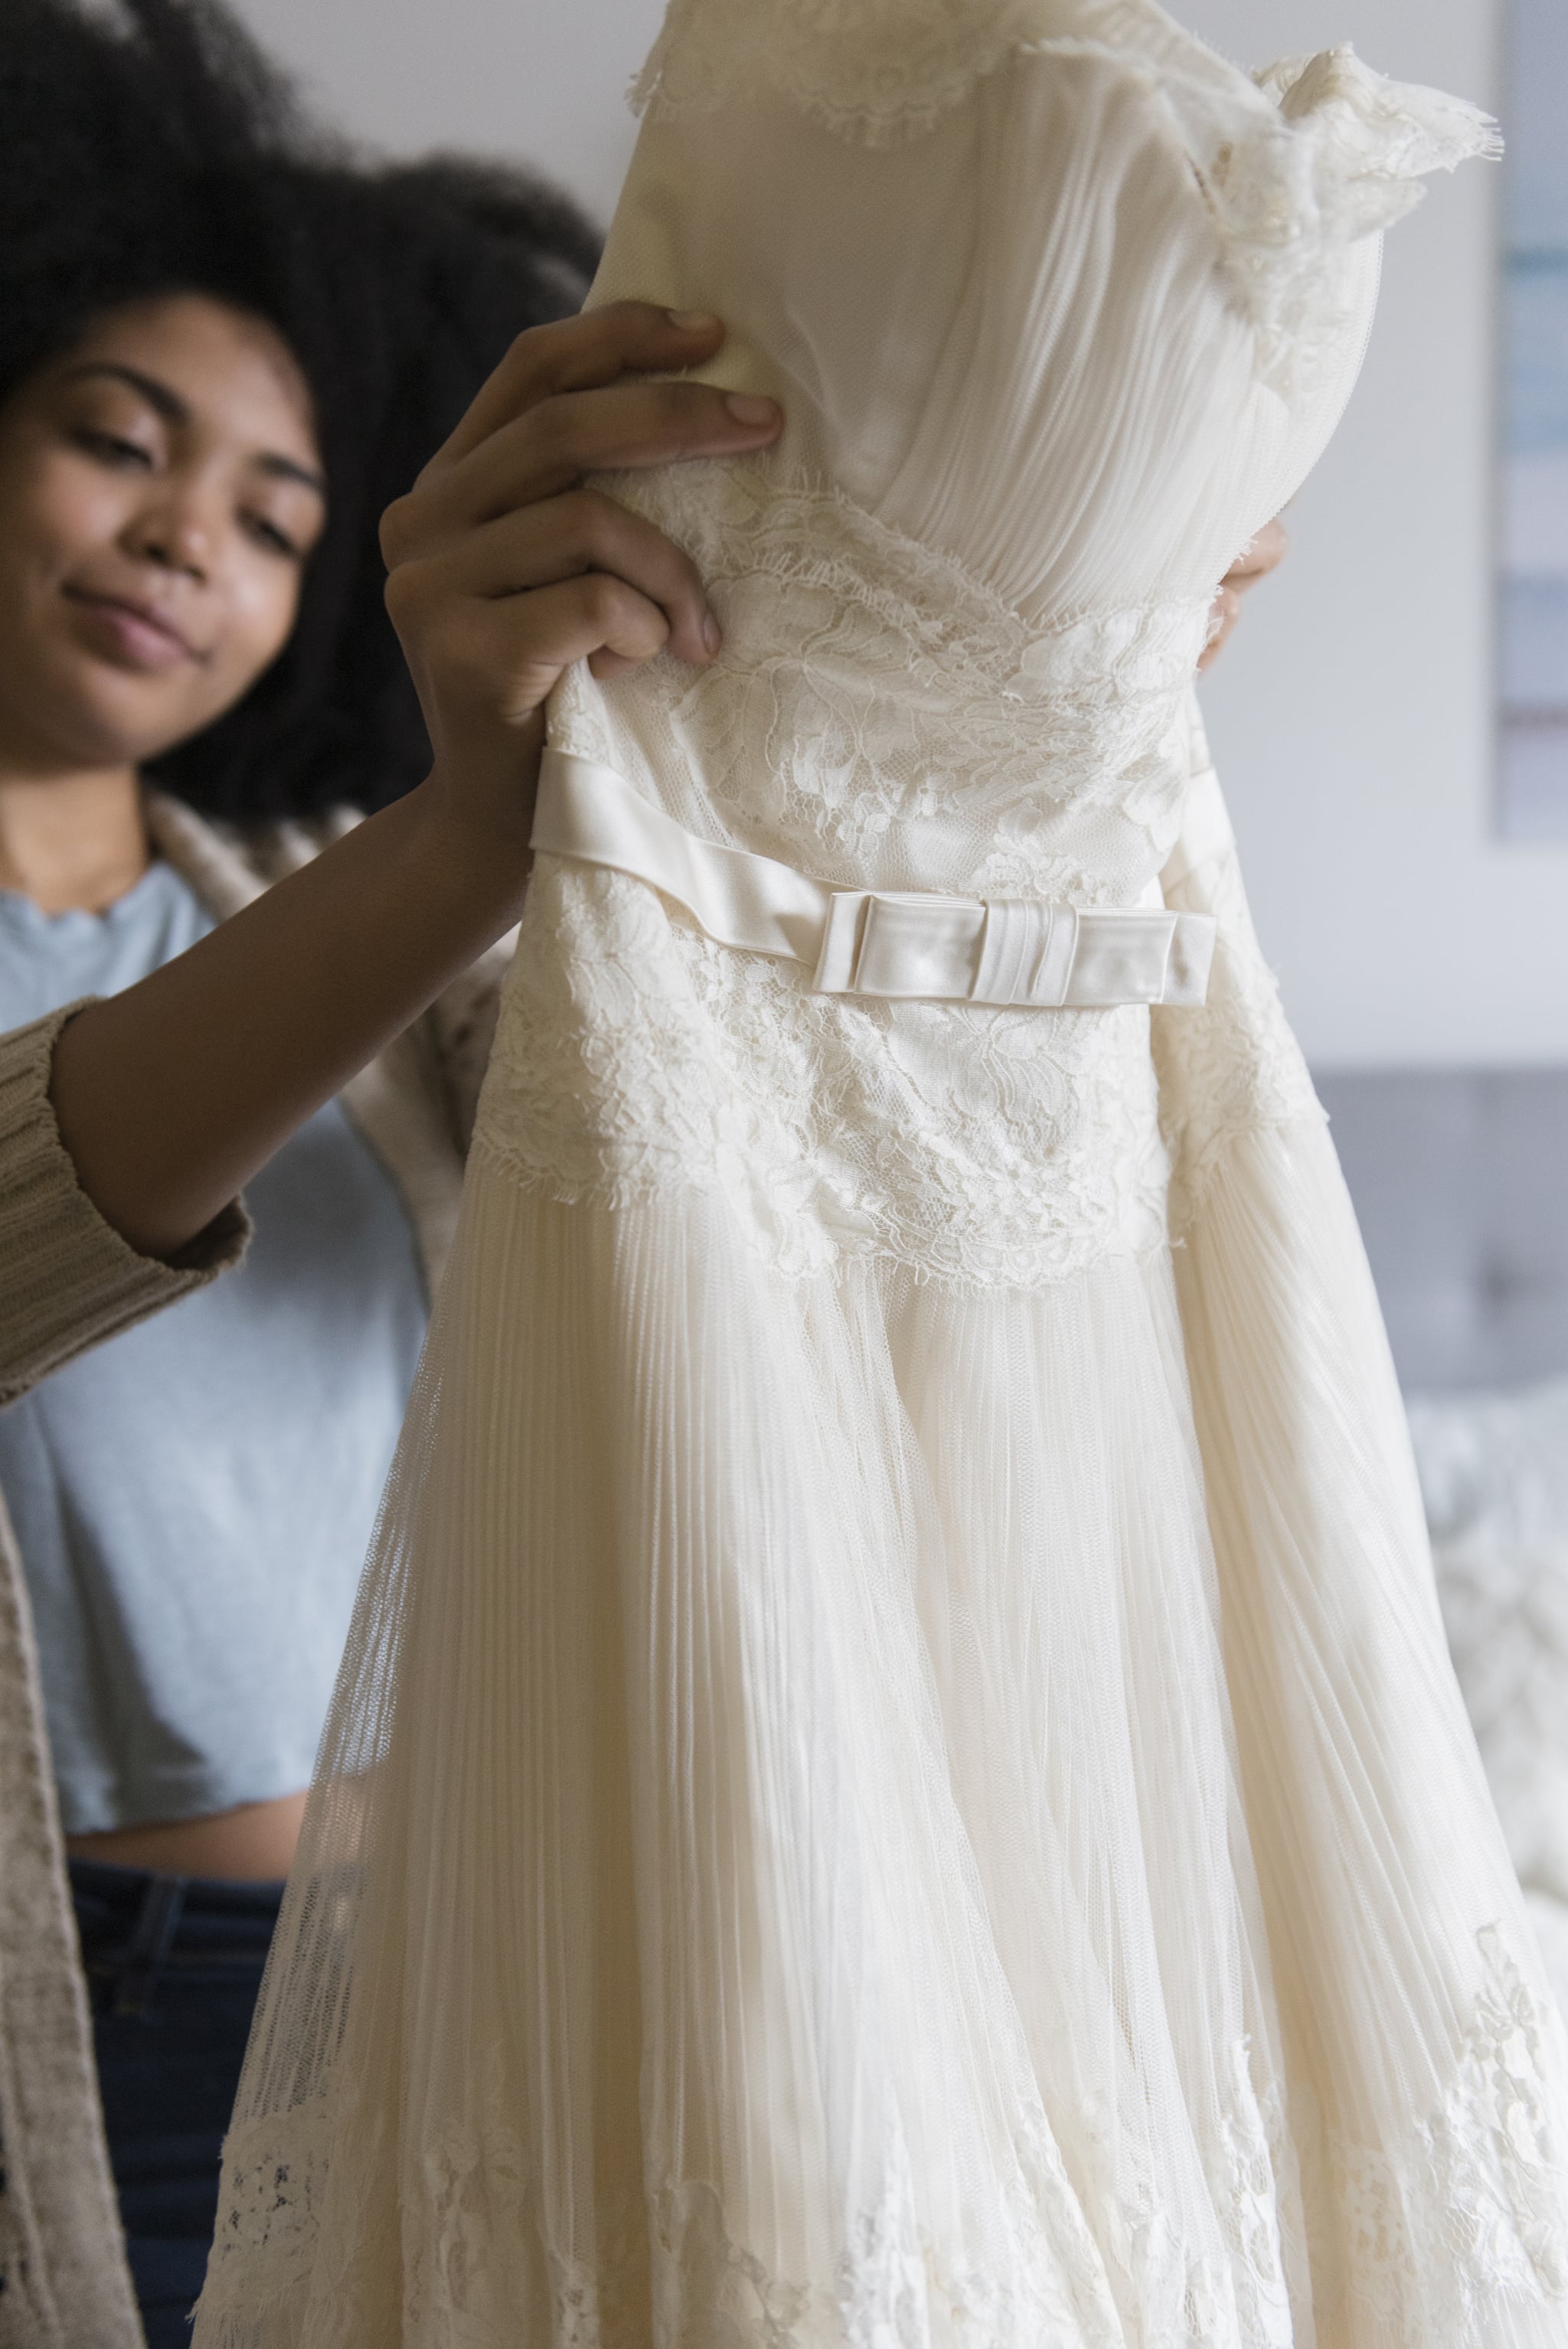 Anjolique Strapless Bridal Wedding Gown Size S | eBay